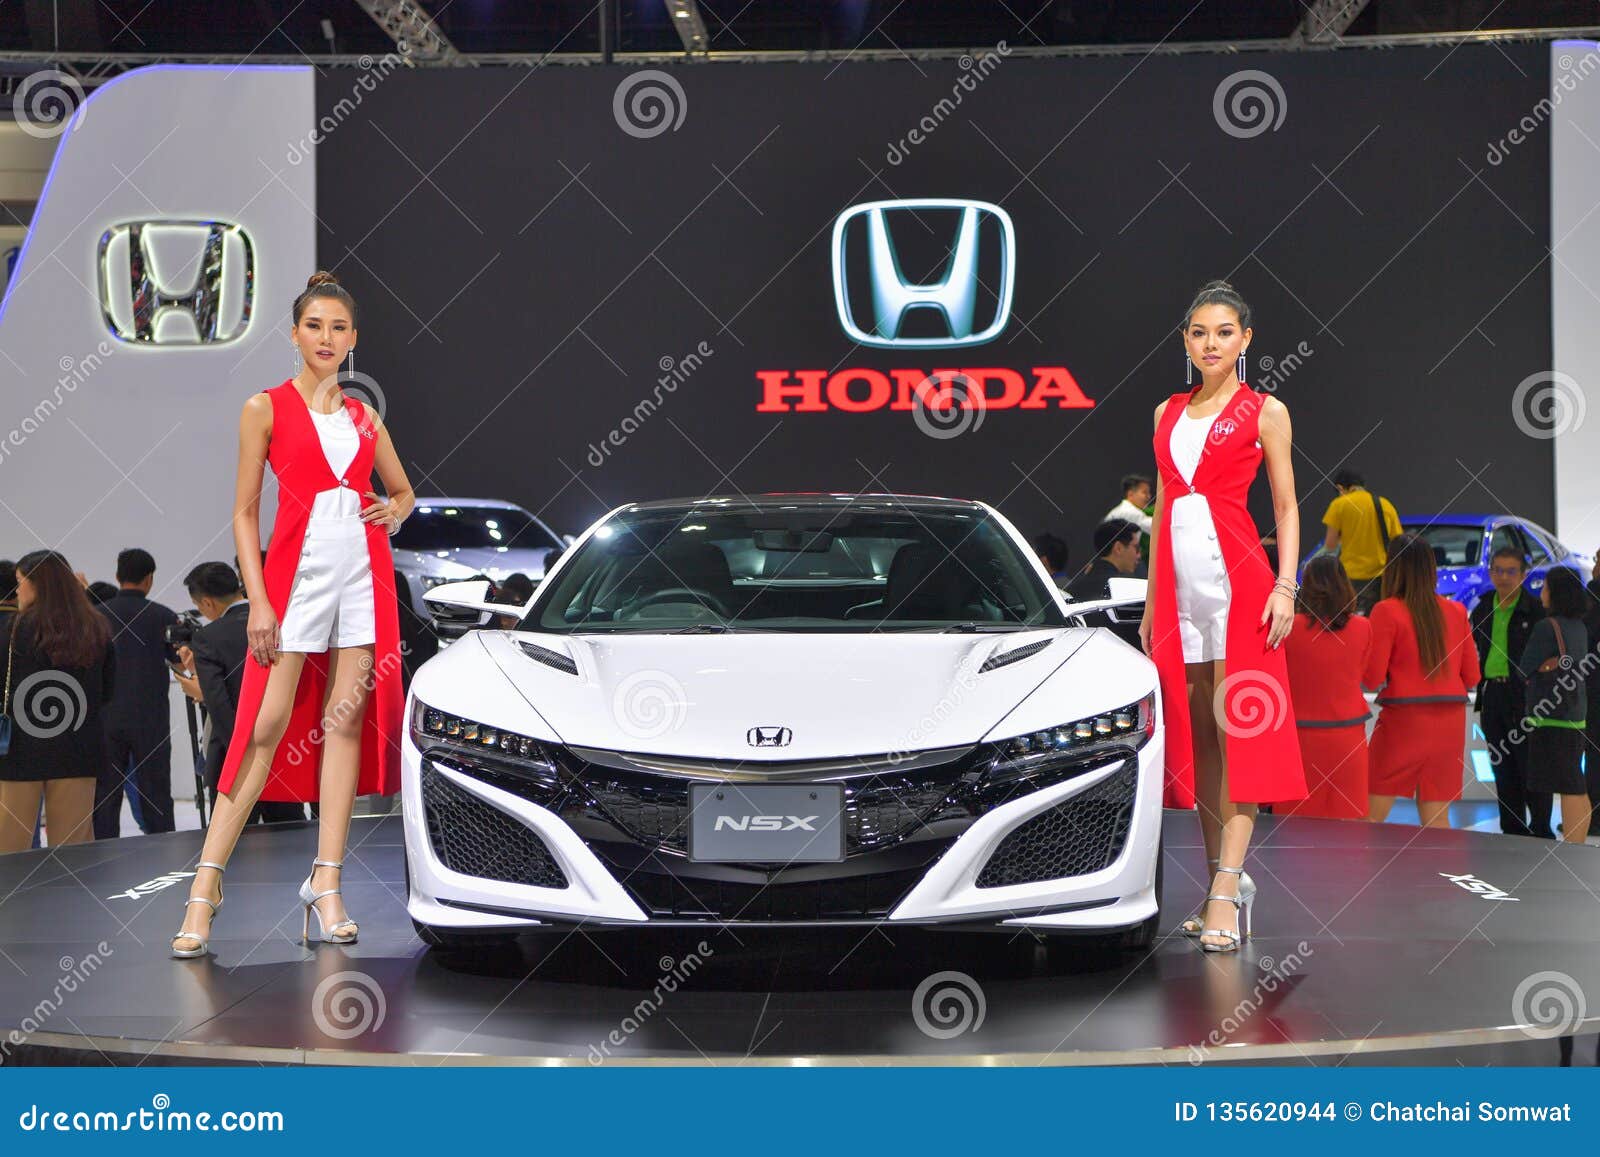 Honda NSX Car On Display At The 35th Thailand International Motor Expo